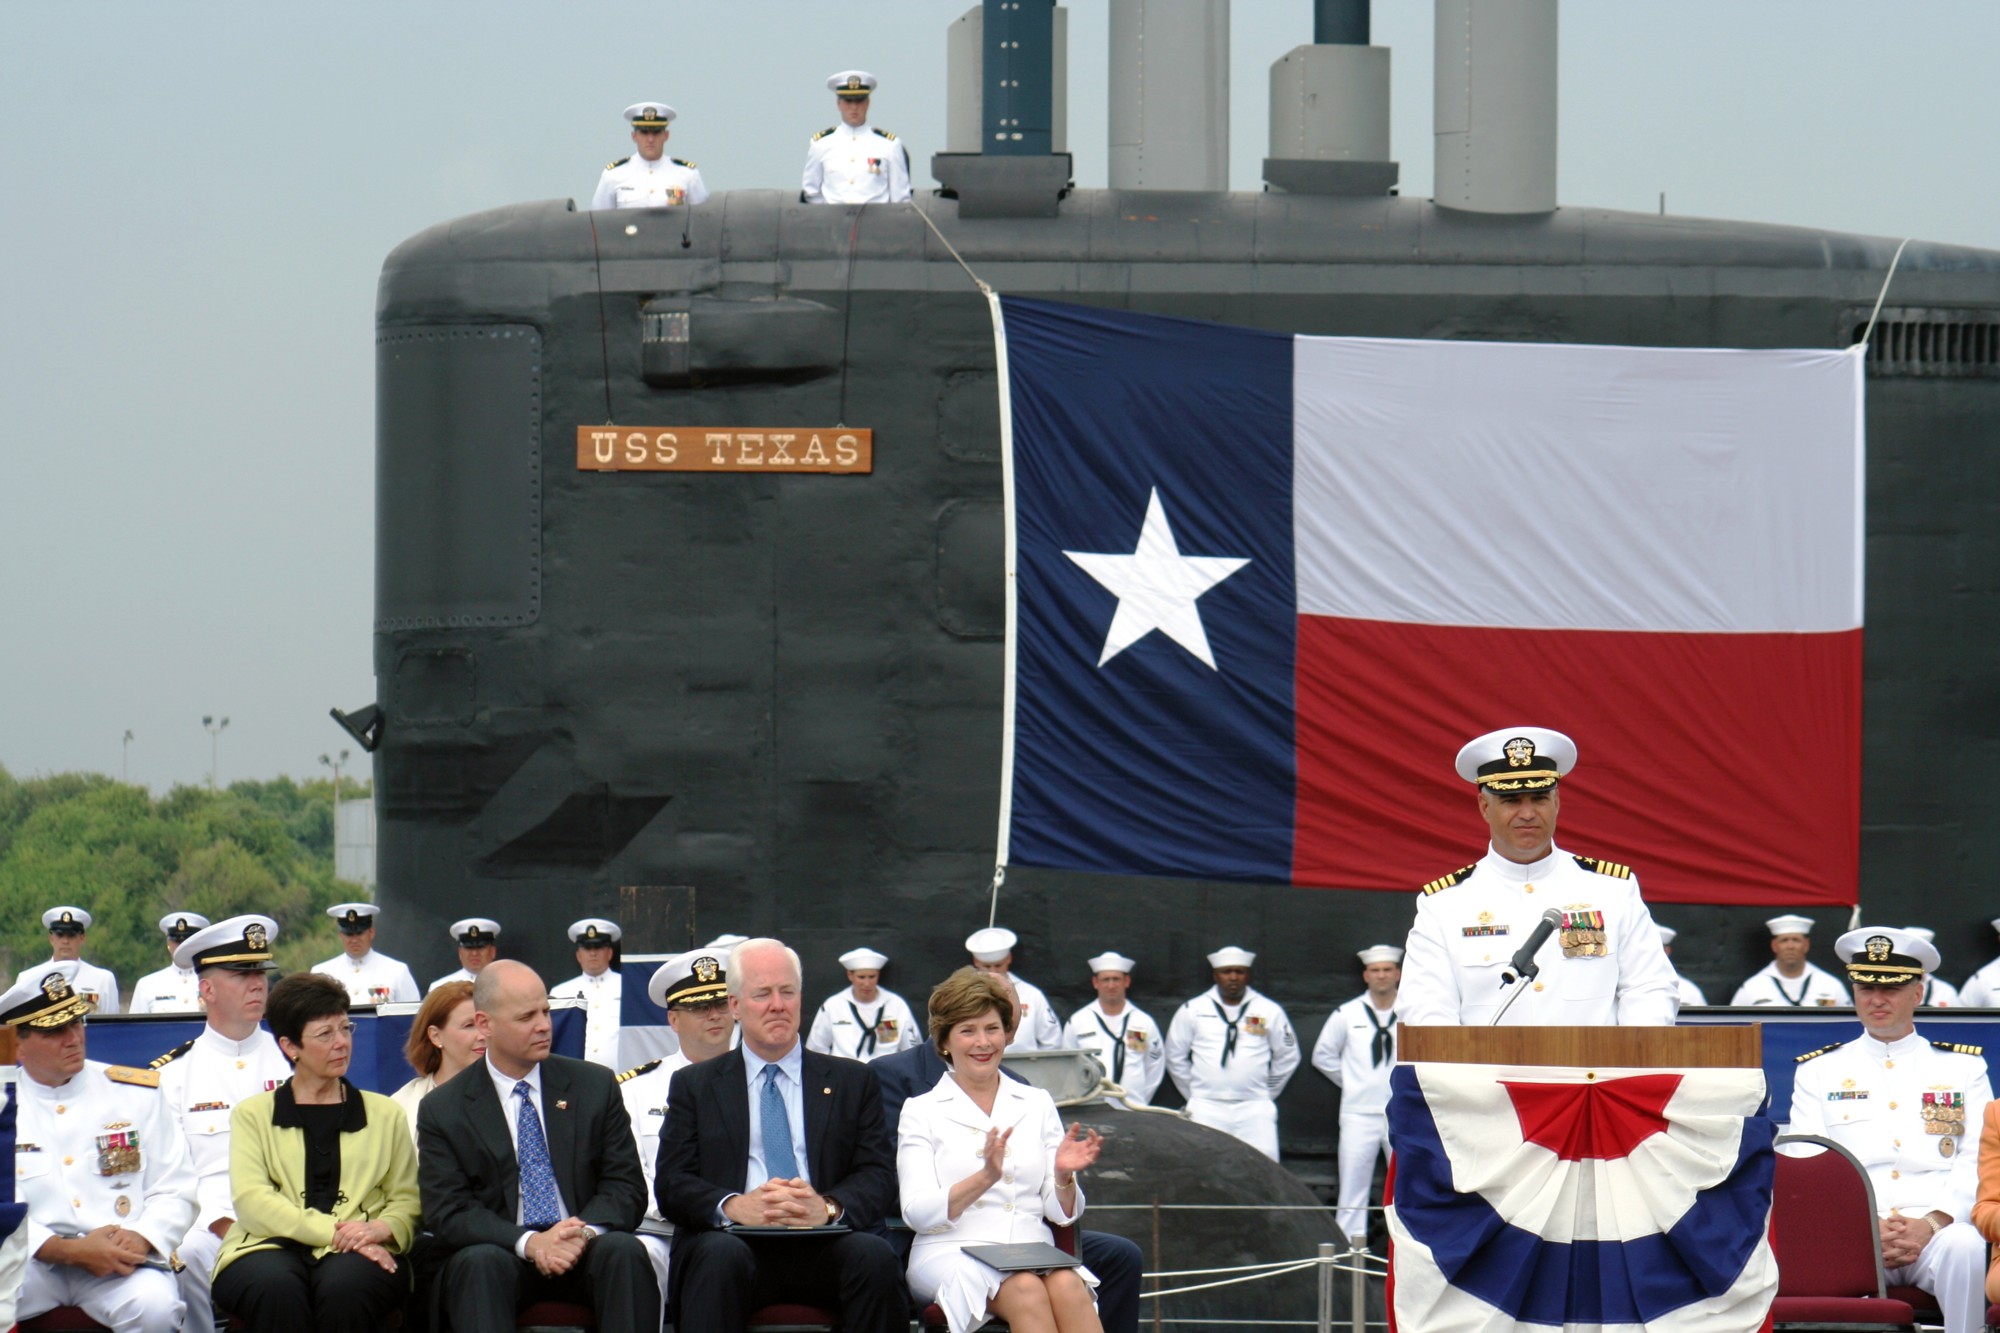 ssn-775 uss texas virginia class attack submarine navy 2006 37 commissioning galveston texas